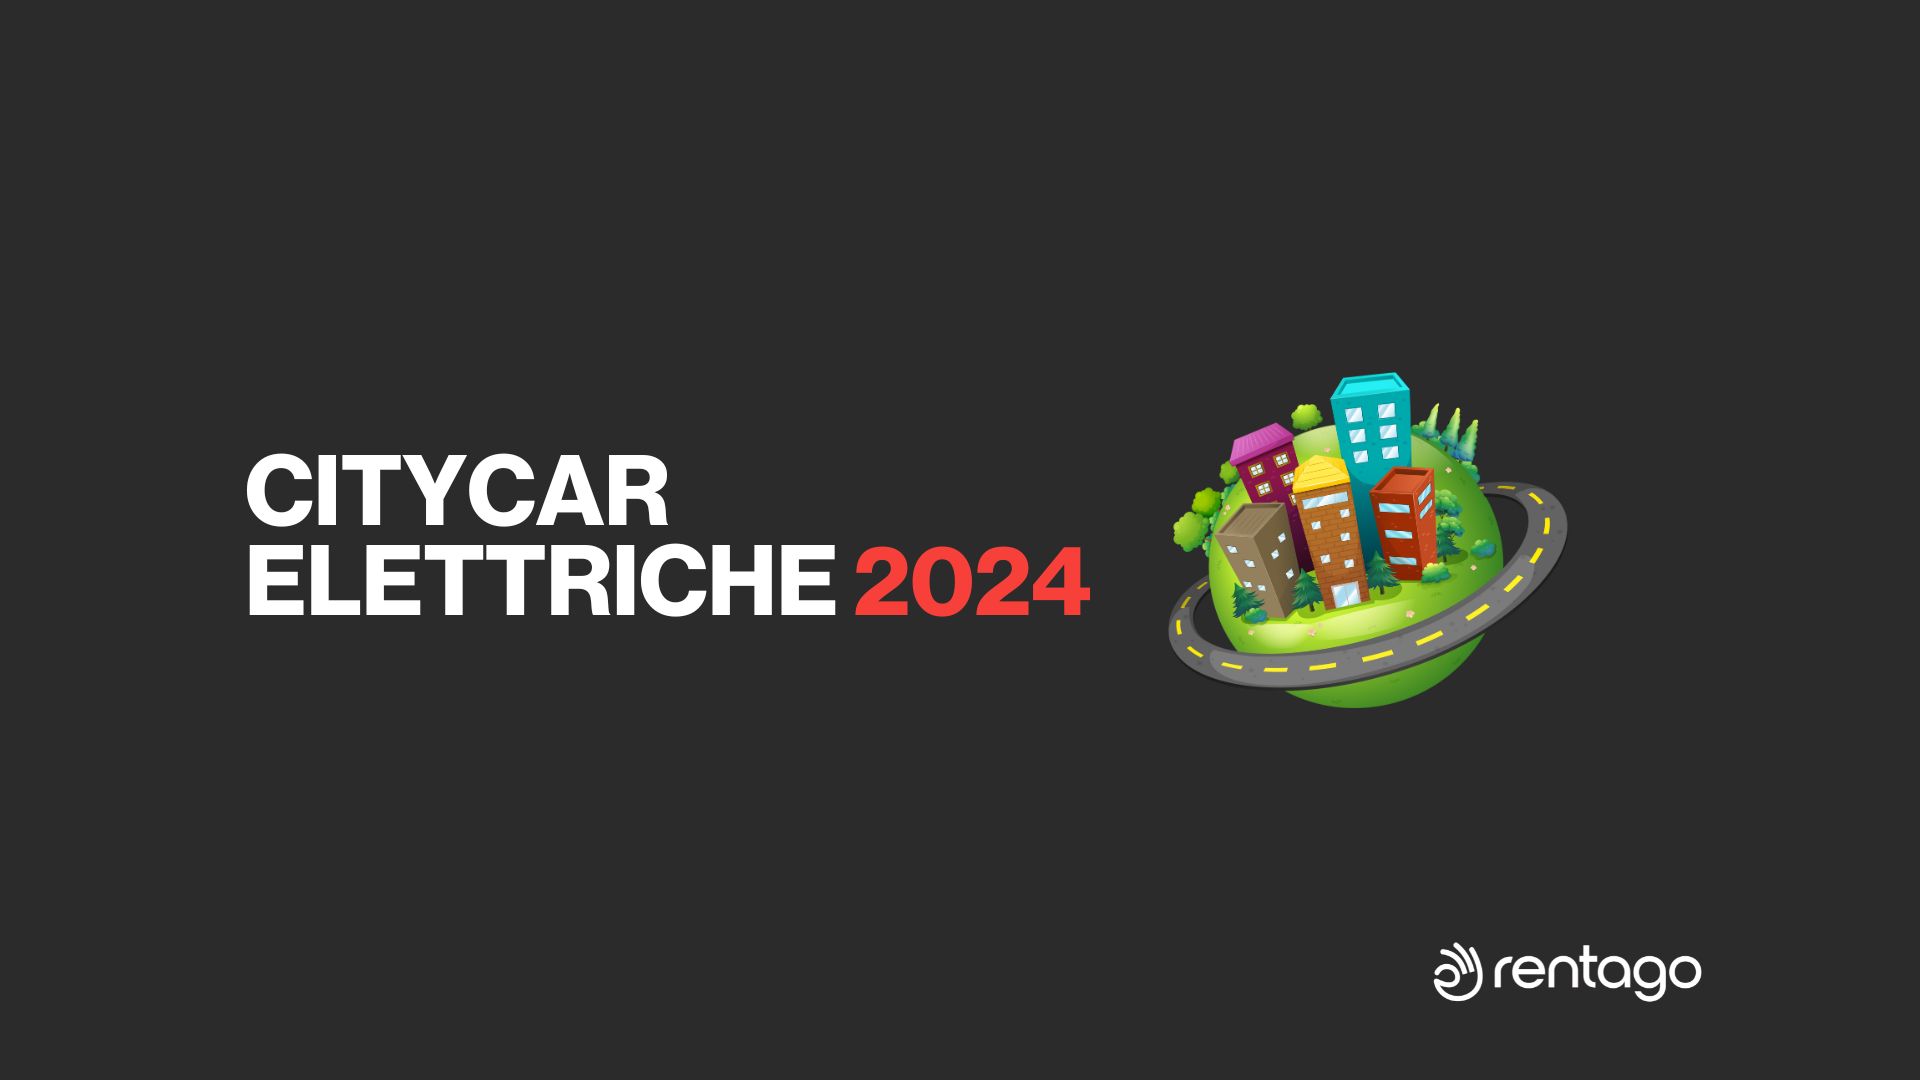 citycar elettriche 2024